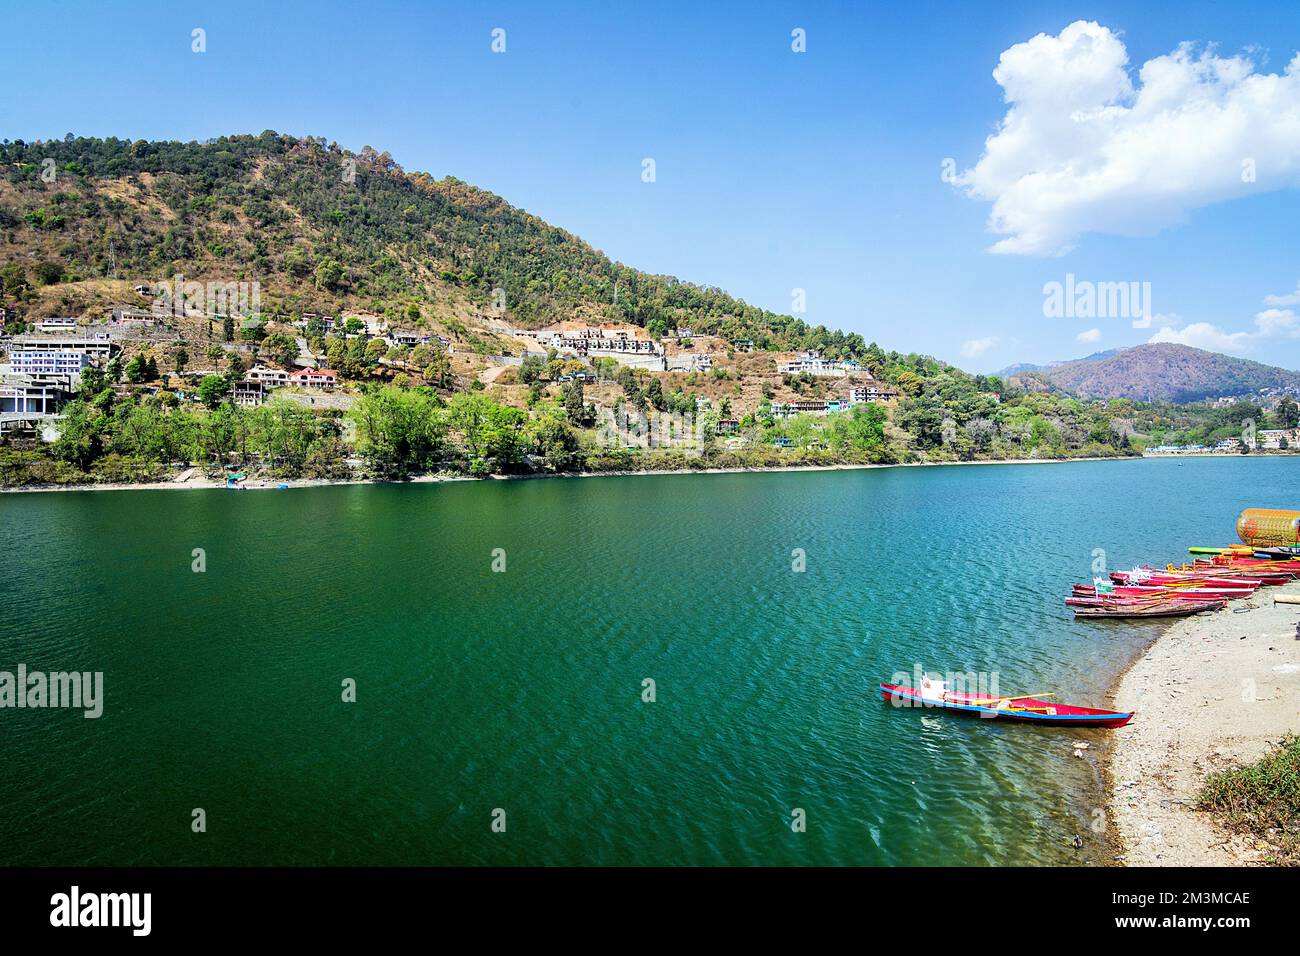 Naukuchiatal, lac de neuf coins, station de colline, Nainital, Kumaon, Uttarakhand, Inde Banque D'Images